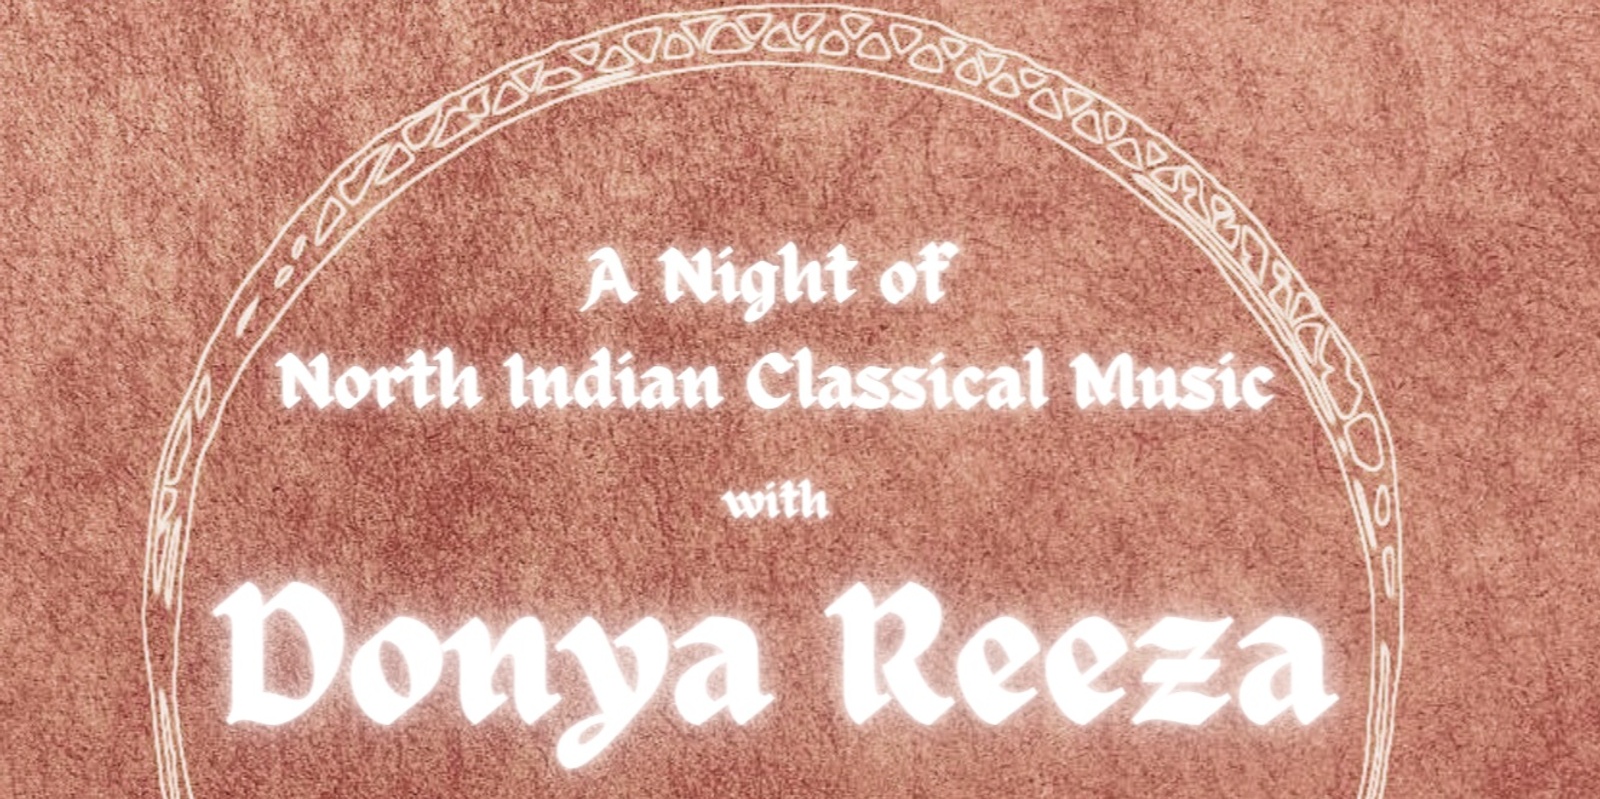 Banner image for Raga, Tala, Rasa: A Night of North Indian Classical Music with Donya Reeza